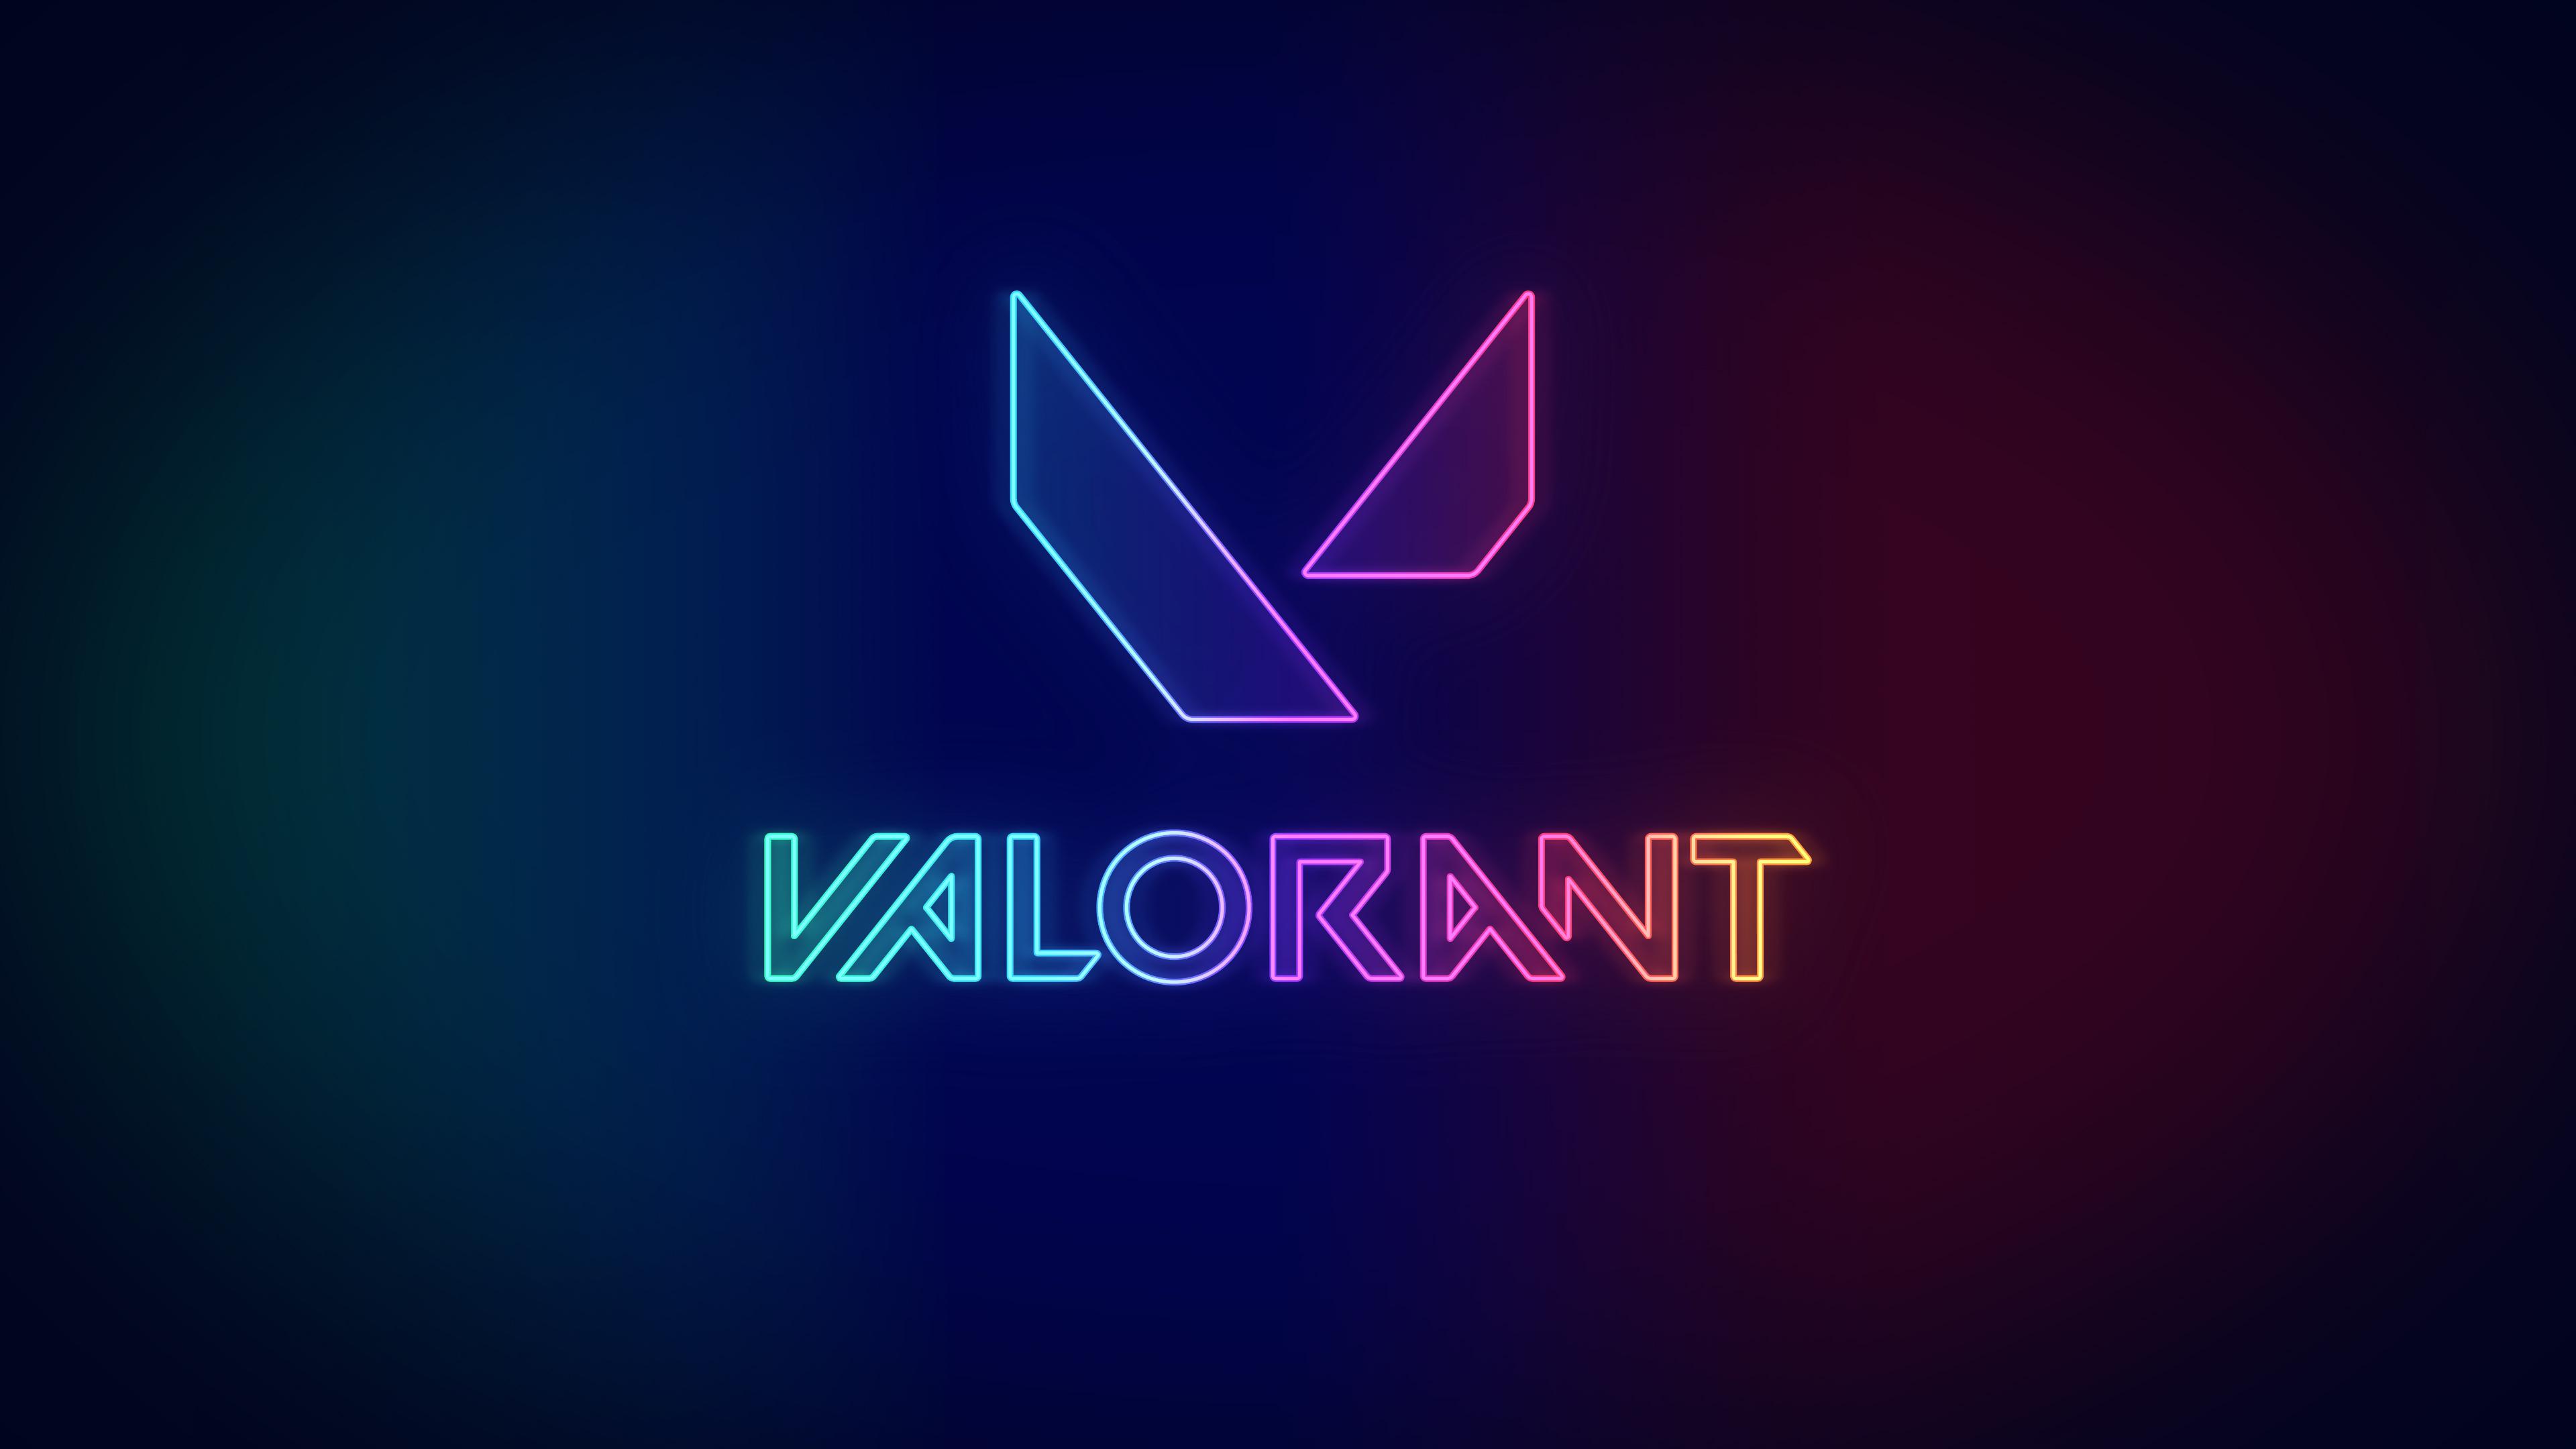 Valorant Logo Wallpaper Free .wallpaperaccess.com